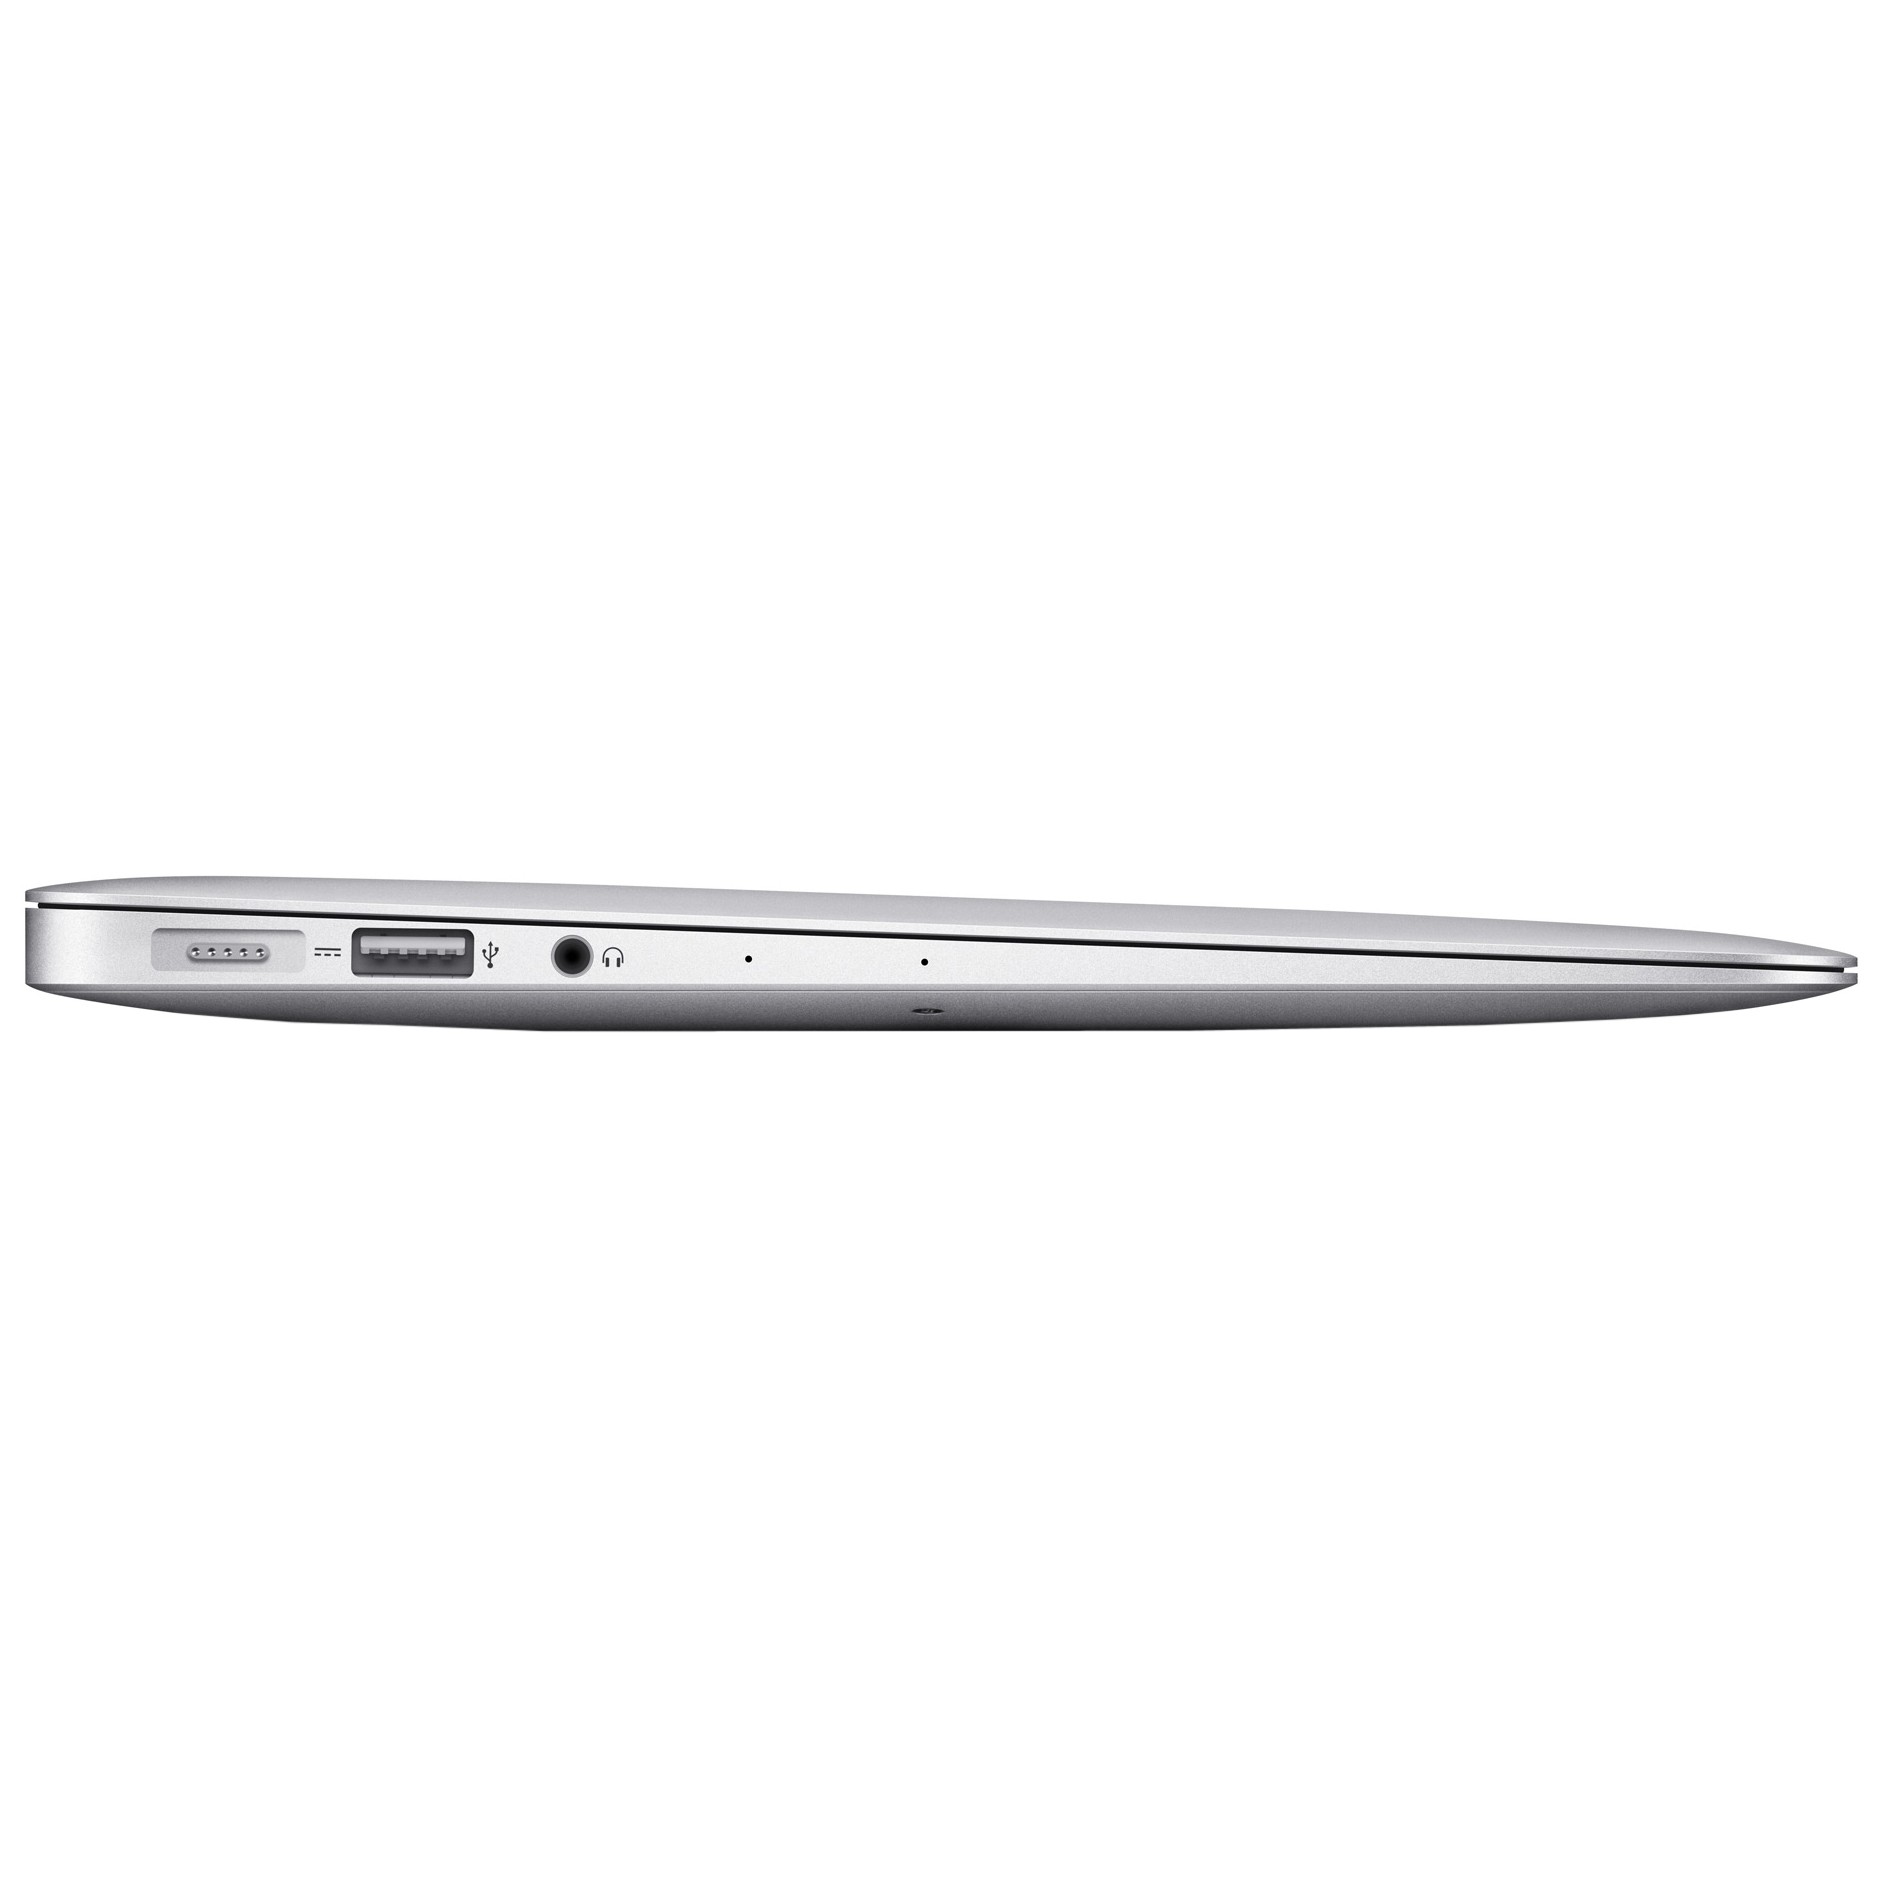 Apple MacBook Air 11 2015 (Z0RL00002)